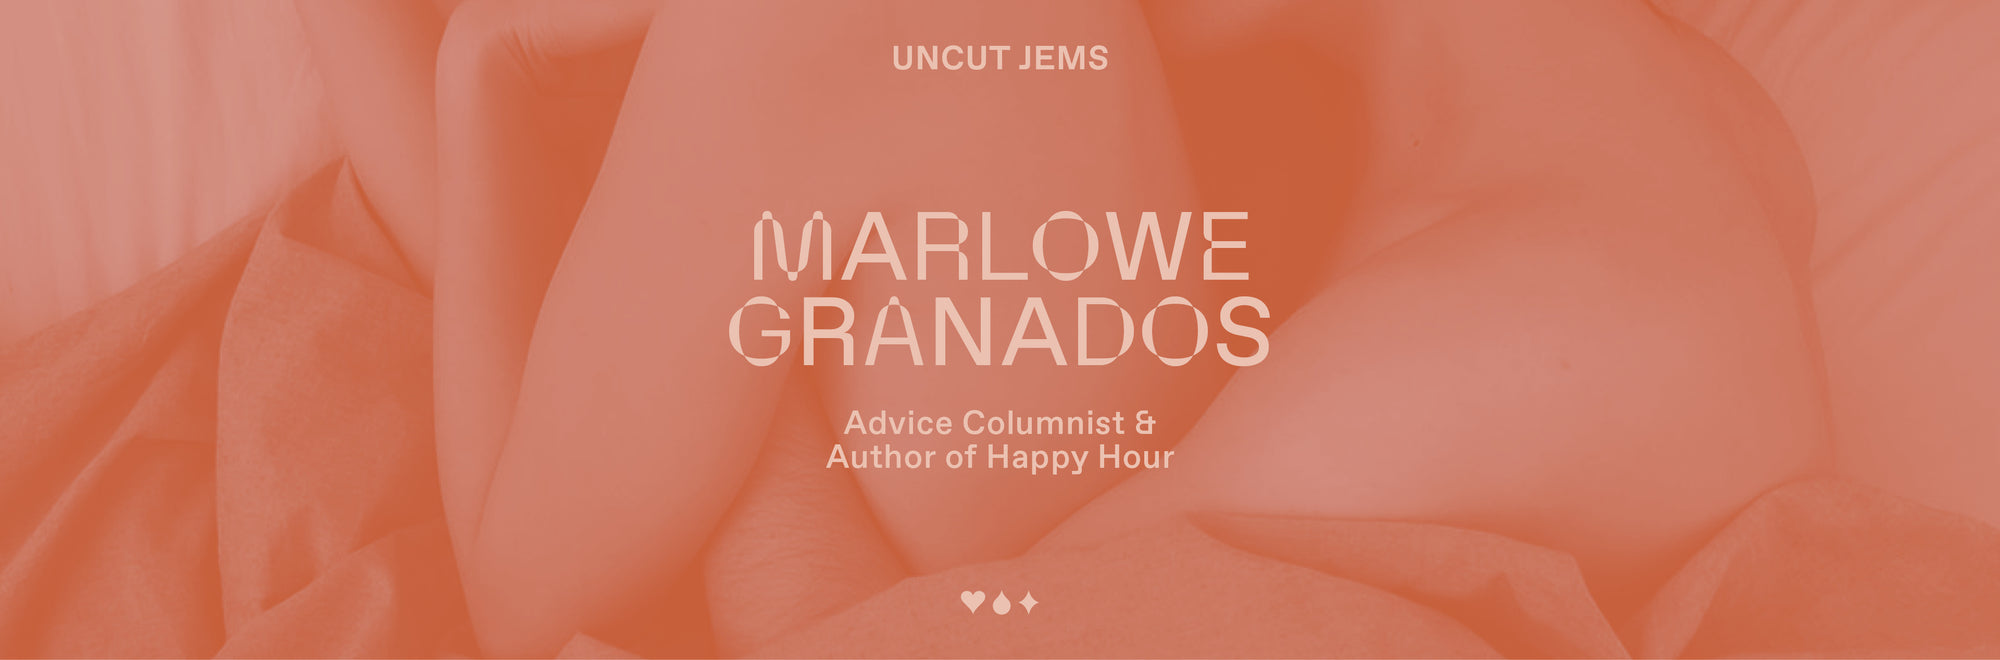 Uncut Jems: Marlowe Granados